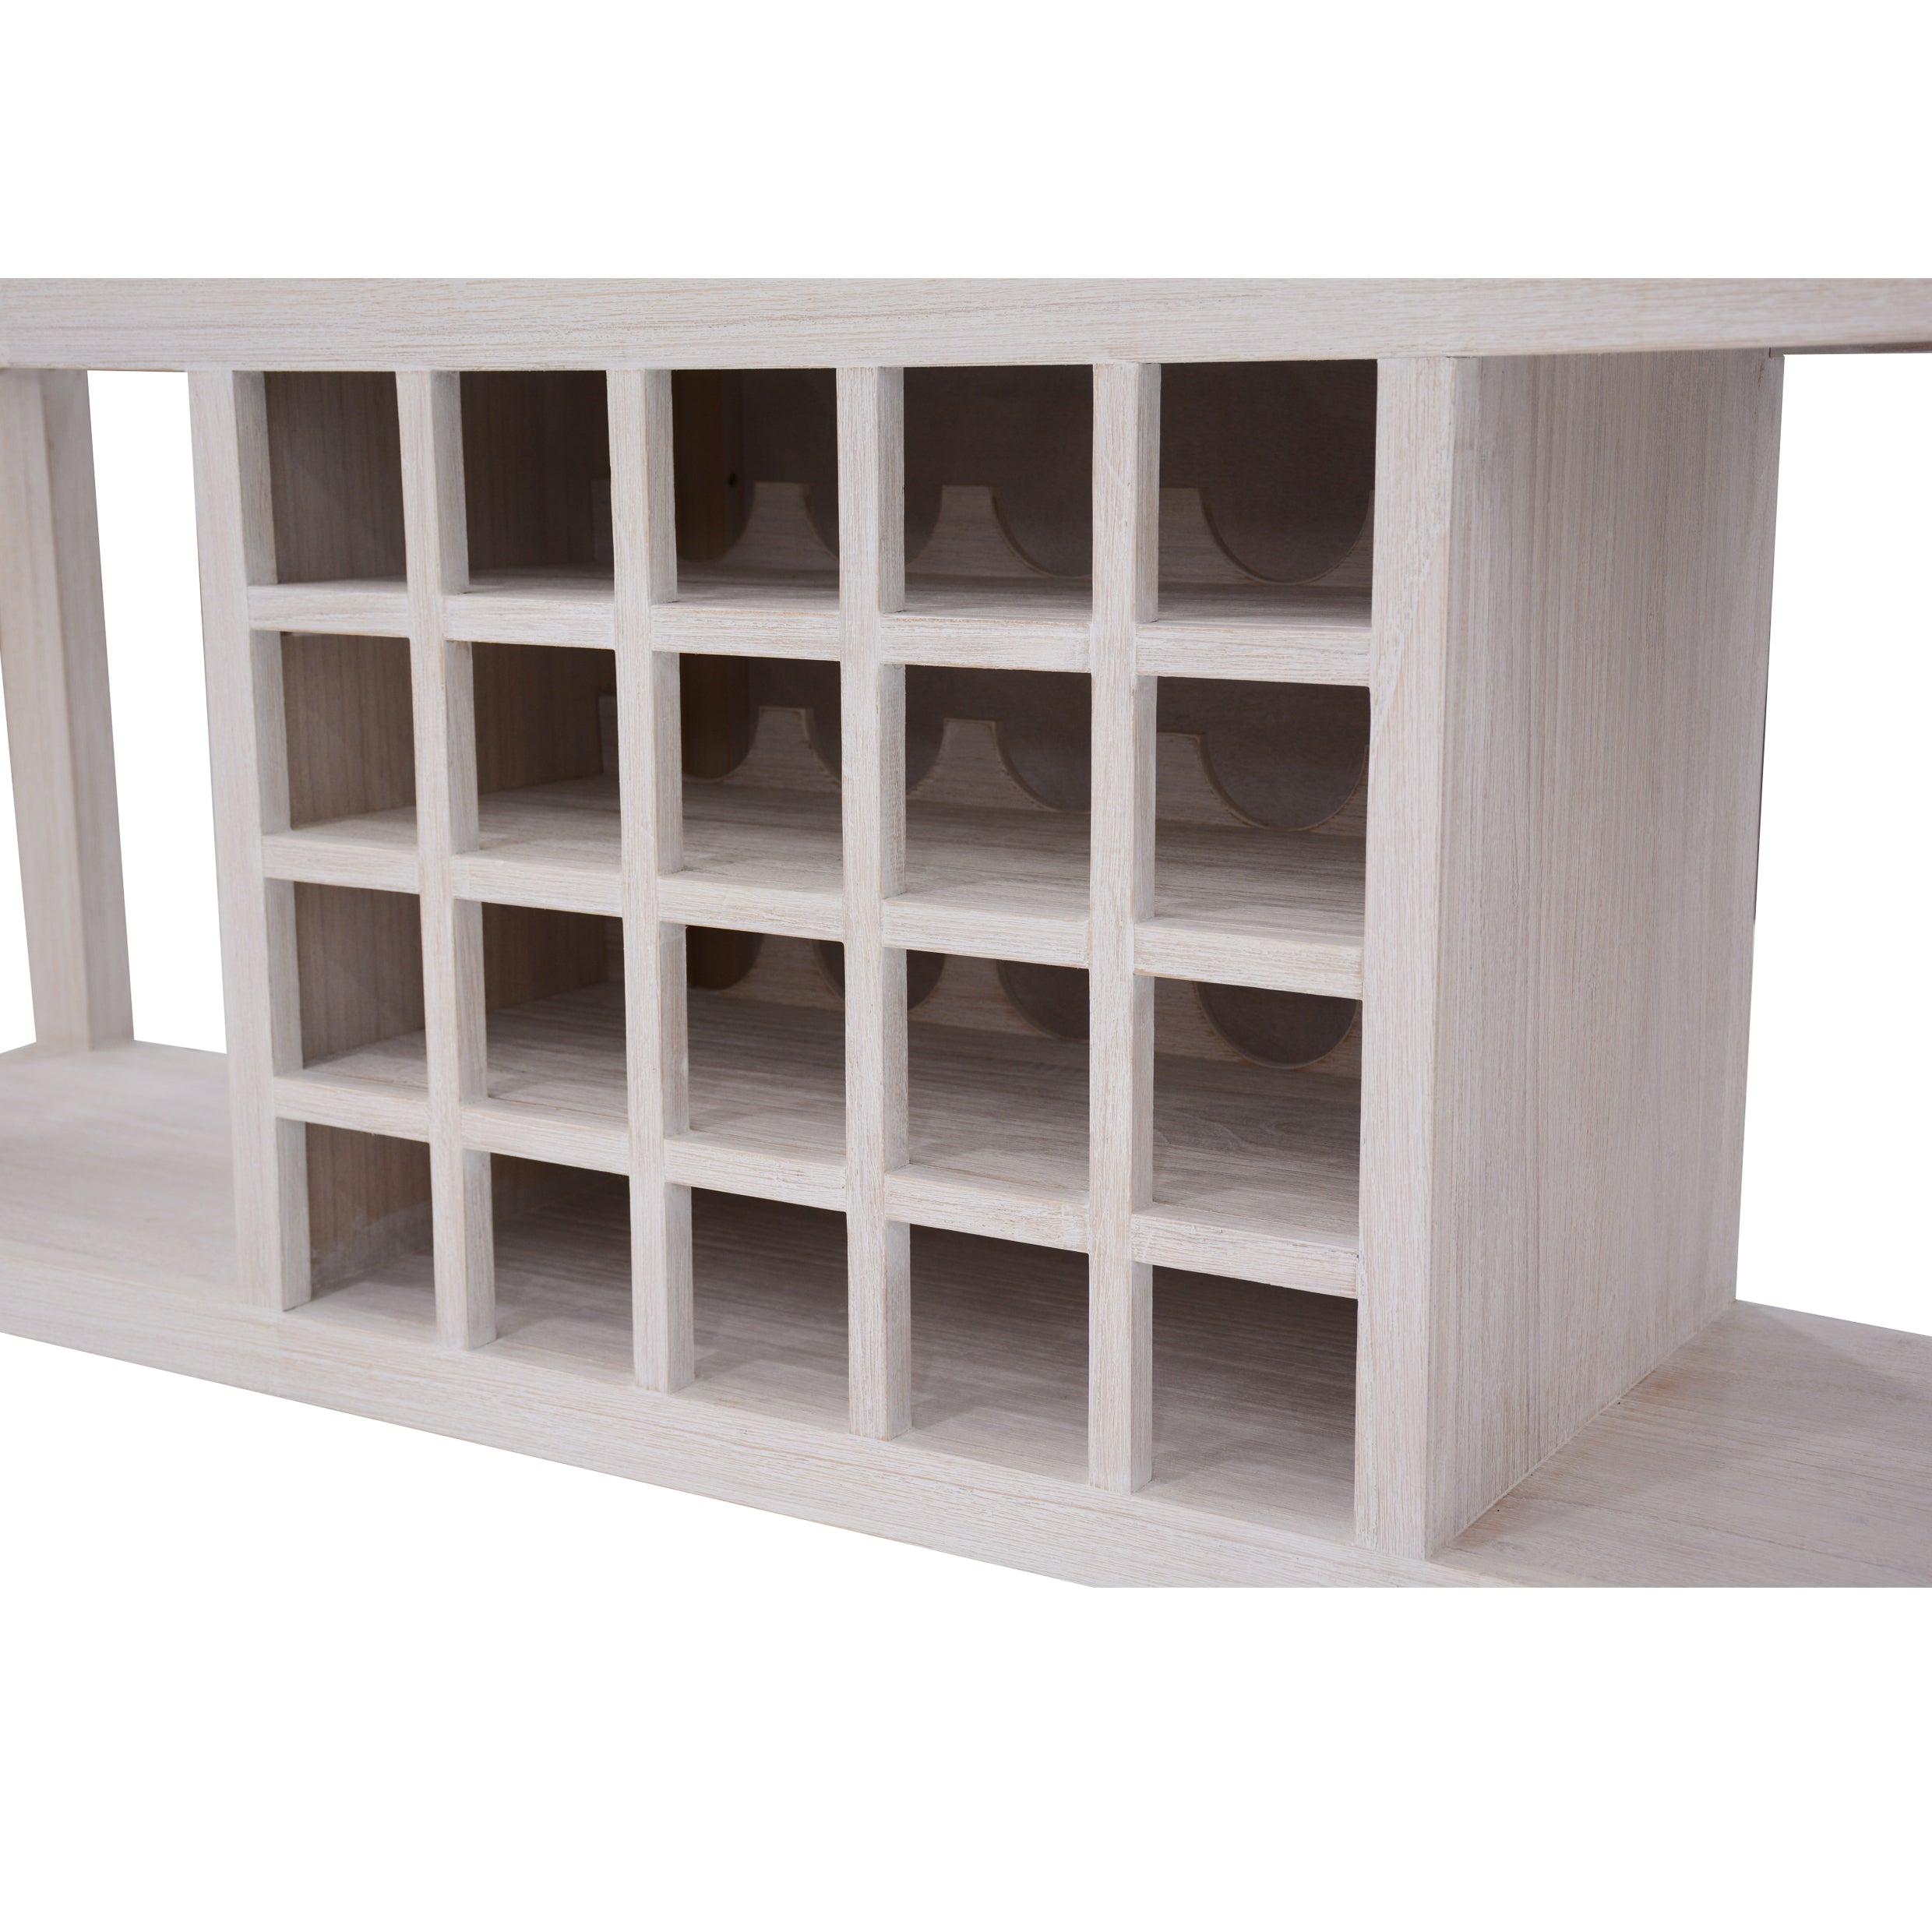 Foxglove Sideboard Buffet Wine Cabinet Bar Bottle Wooden Storage Rack - White